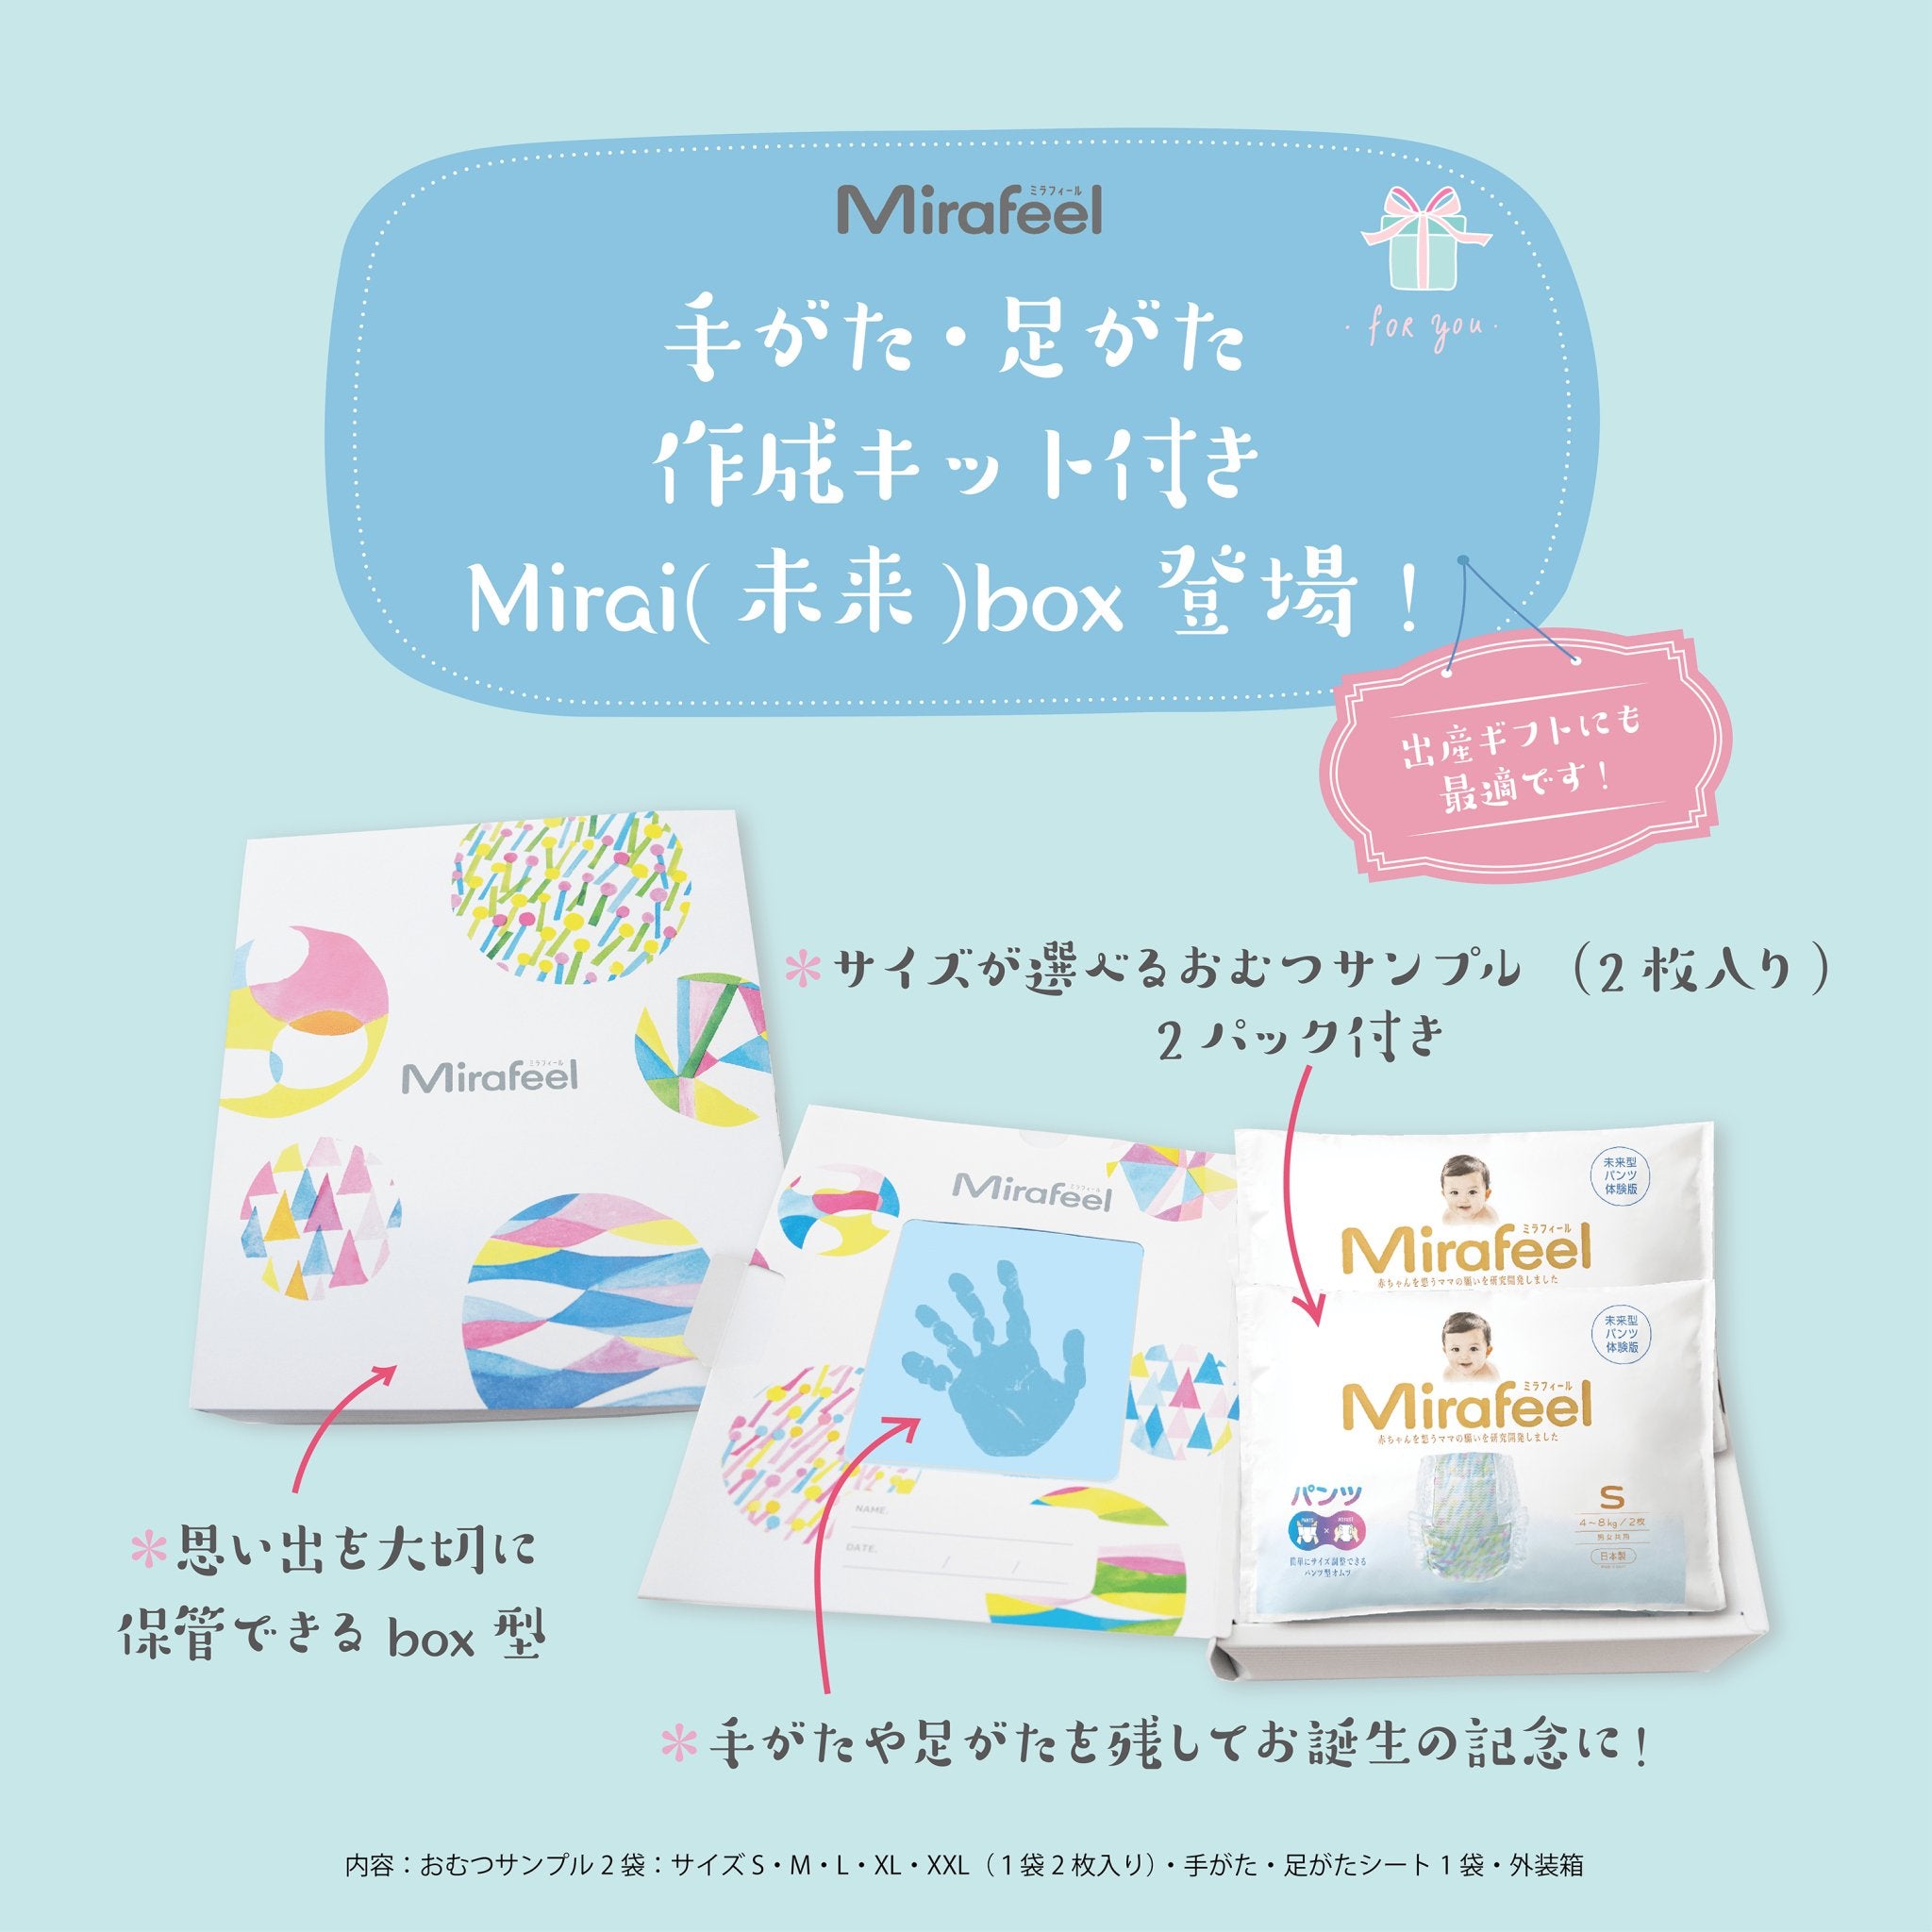 Mirai(未来)box